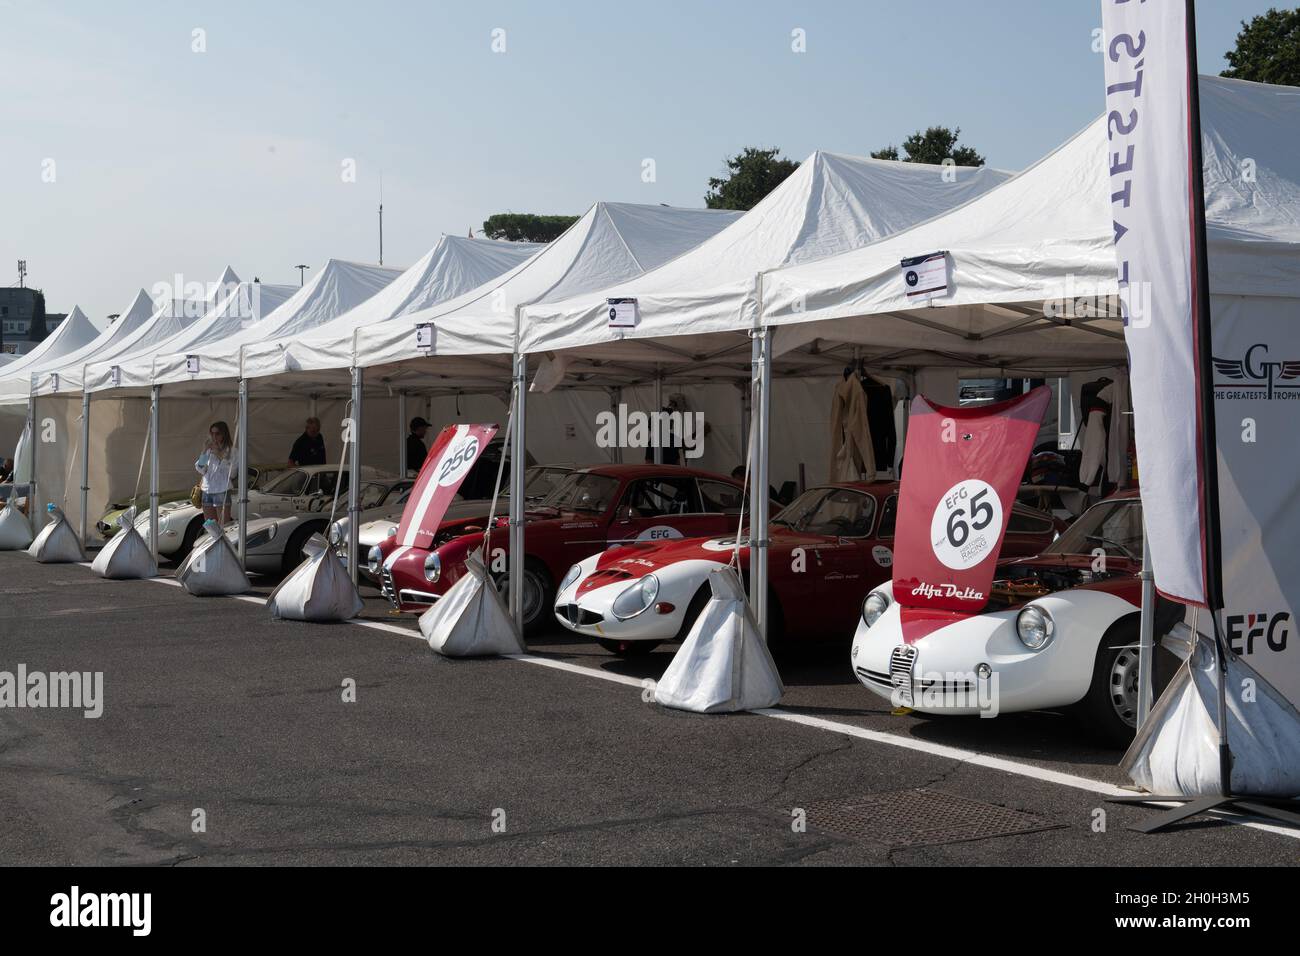 Italy, september 11 2021. Vallelunga classic. Alfa Romeo historical sports car aligned in circuit paddock Stock Photo